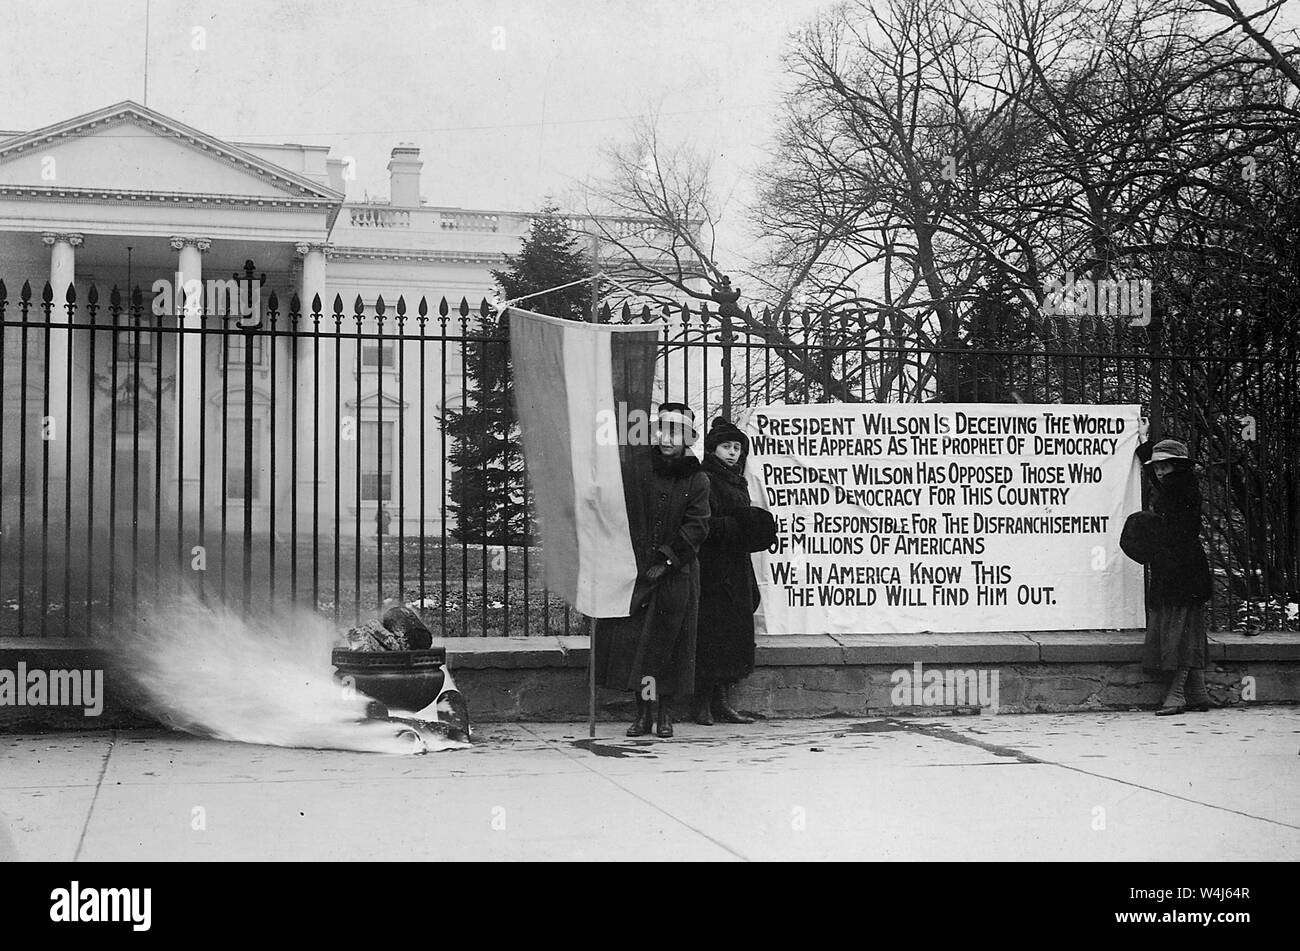 Woman suffrage in Washington, Suffragette Banner, 1917 - 1918 Stock Photo